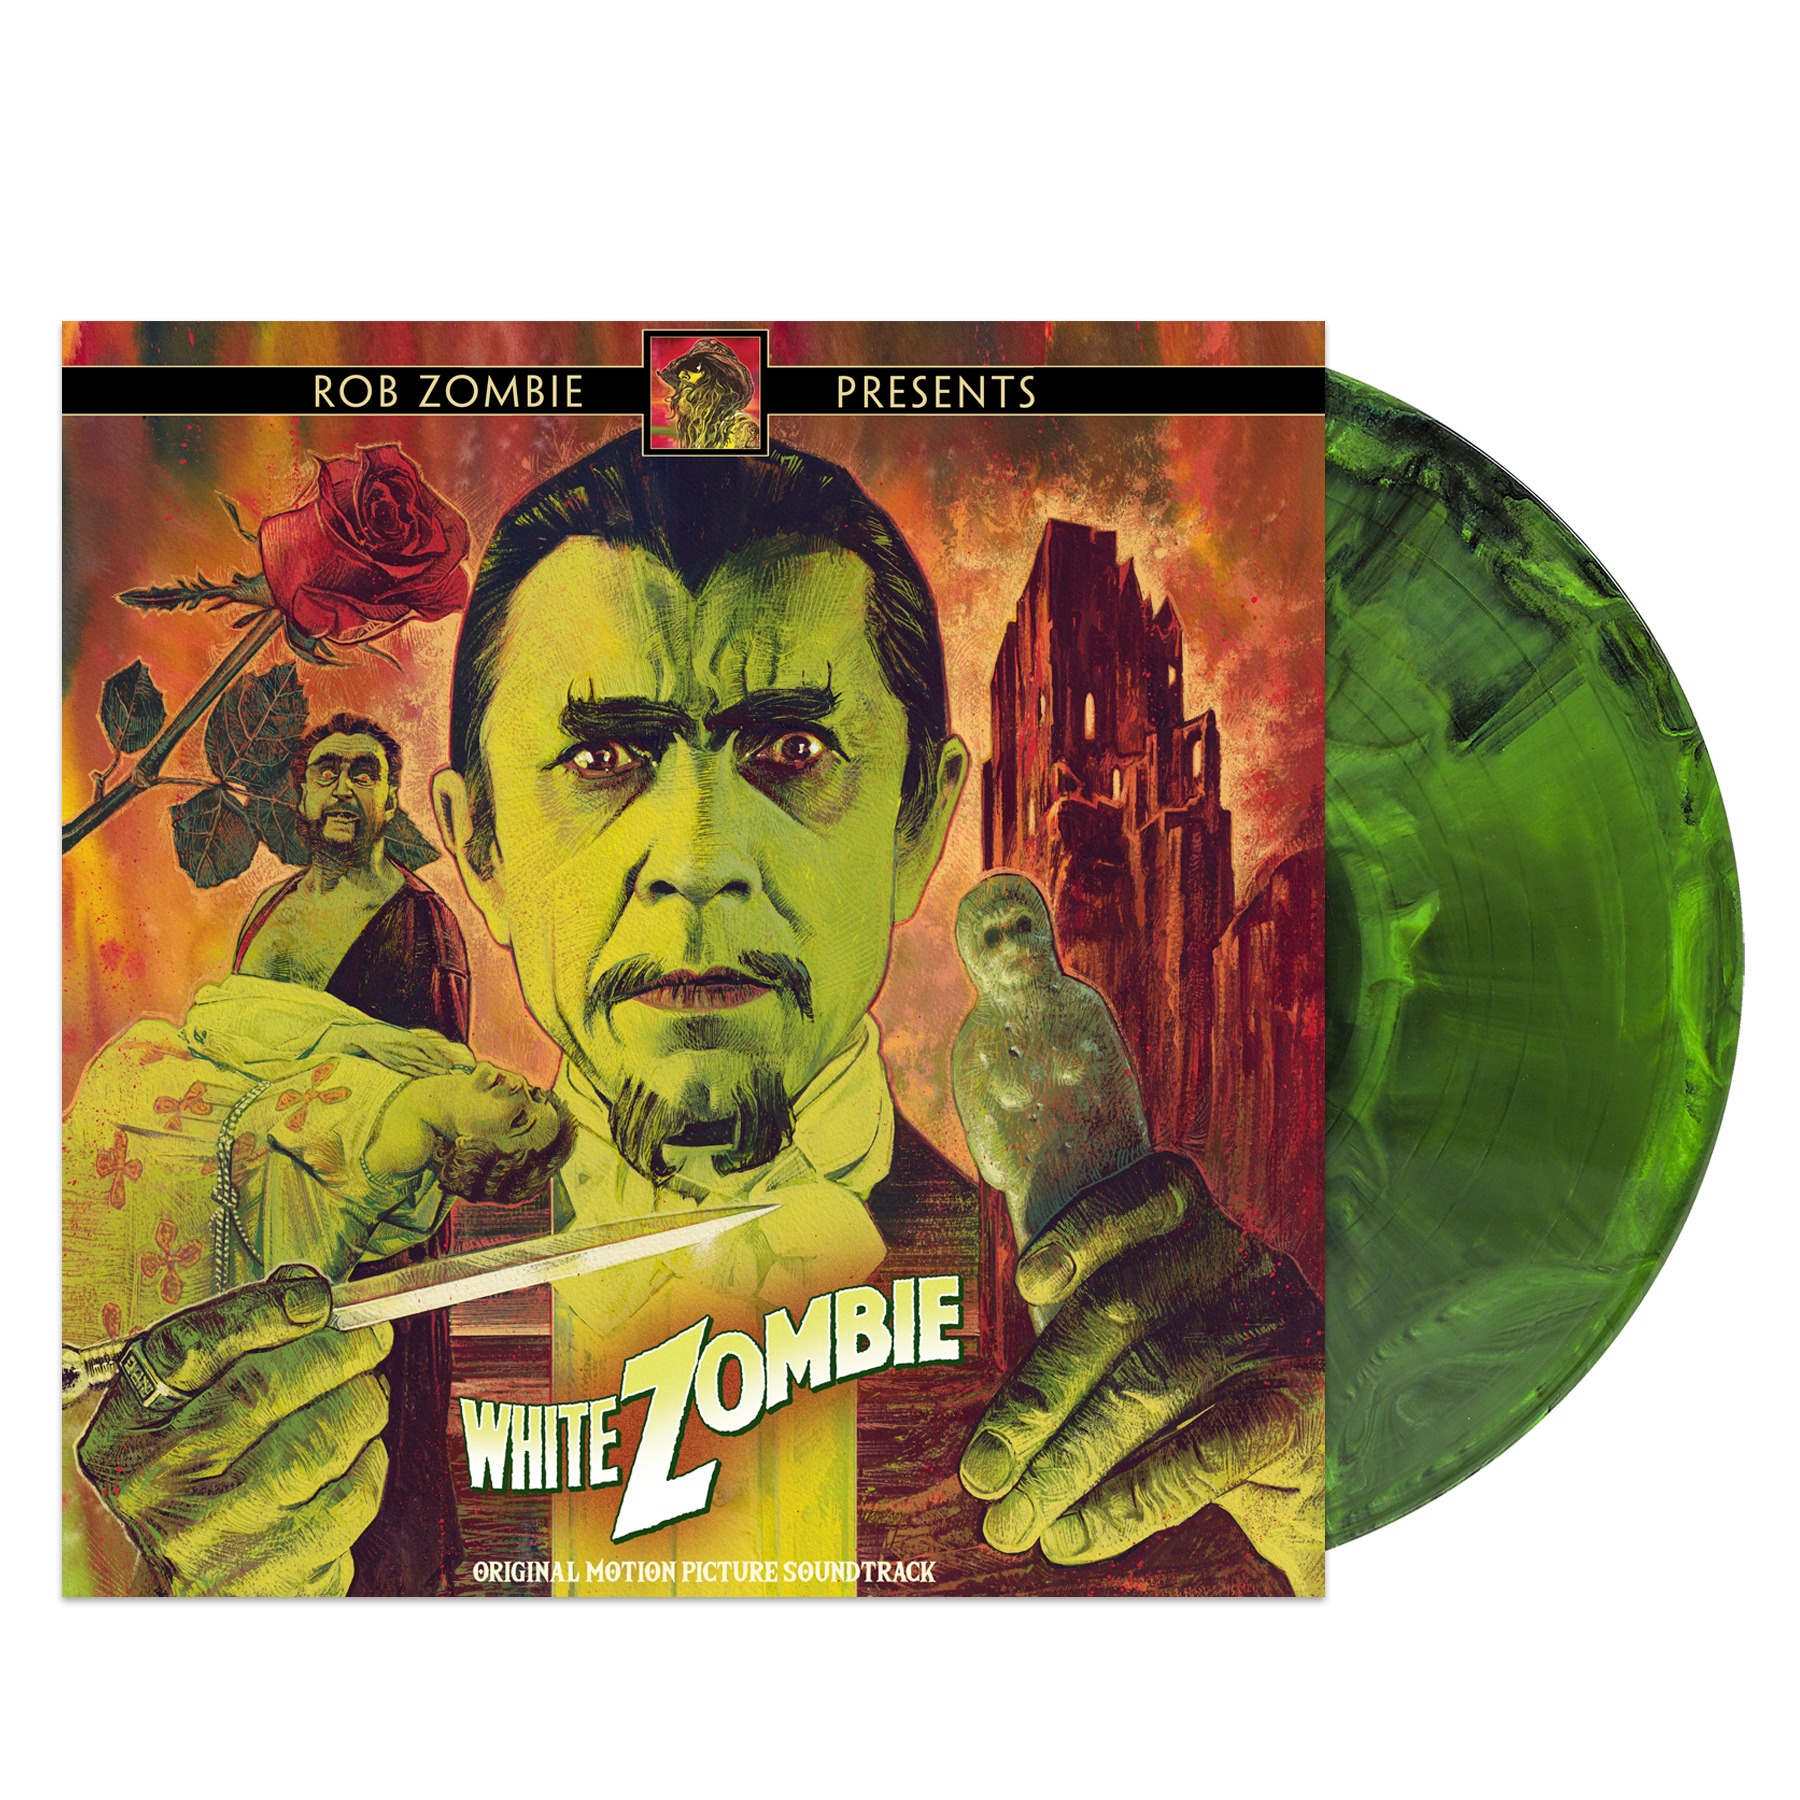 ROB ZOMBIE PRESENTS WHITE ZOMBIE Original Motion Picture Soundtrack